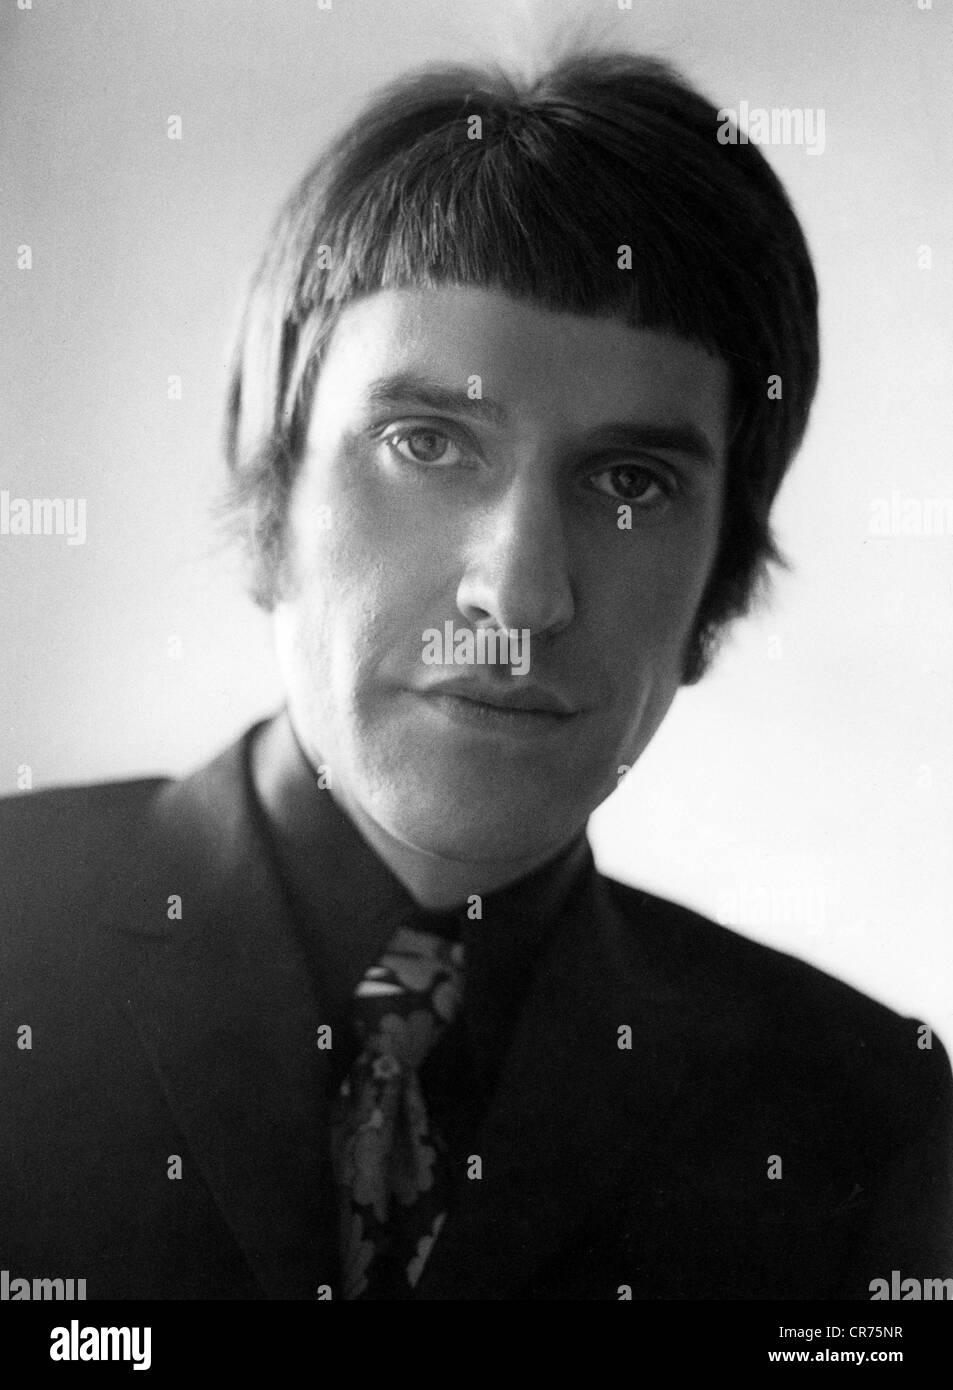 Kinks, The, British music band, member Peter Quaife, middle of 1960s, - kinks-the-british-music-band-member-peter-quaife-middle-of-1960s-male-CR75NR